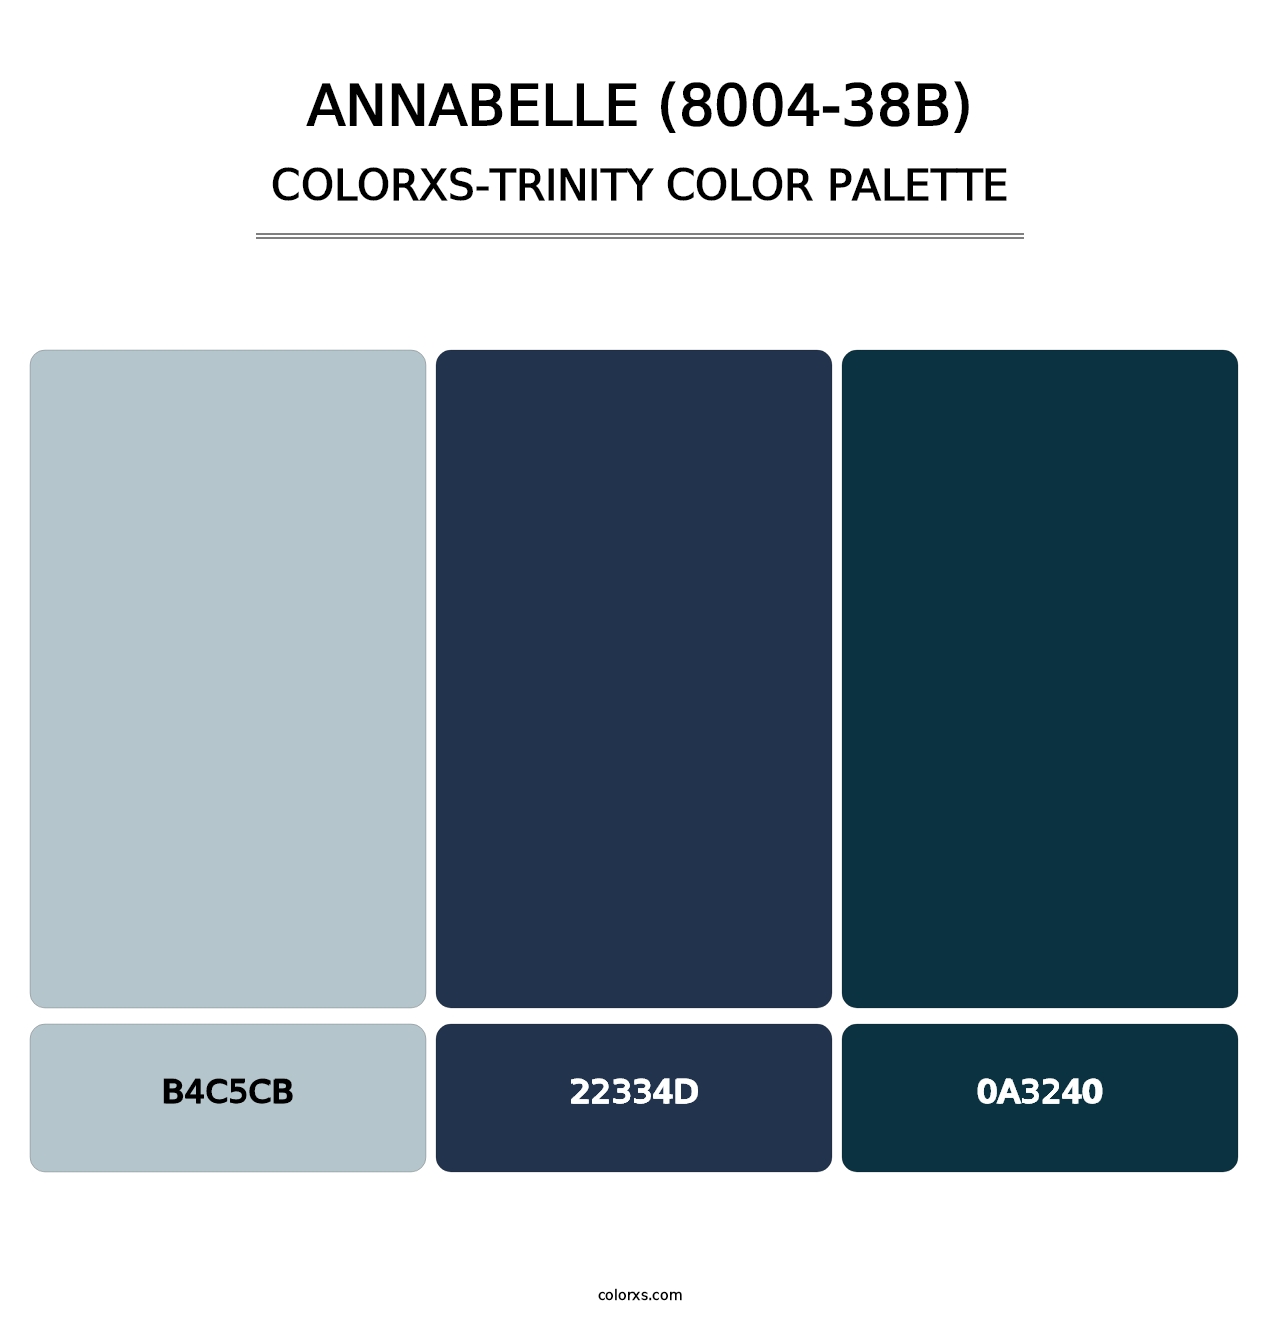 Annabelle (8004-38B) - Colorxs Trinity Palette